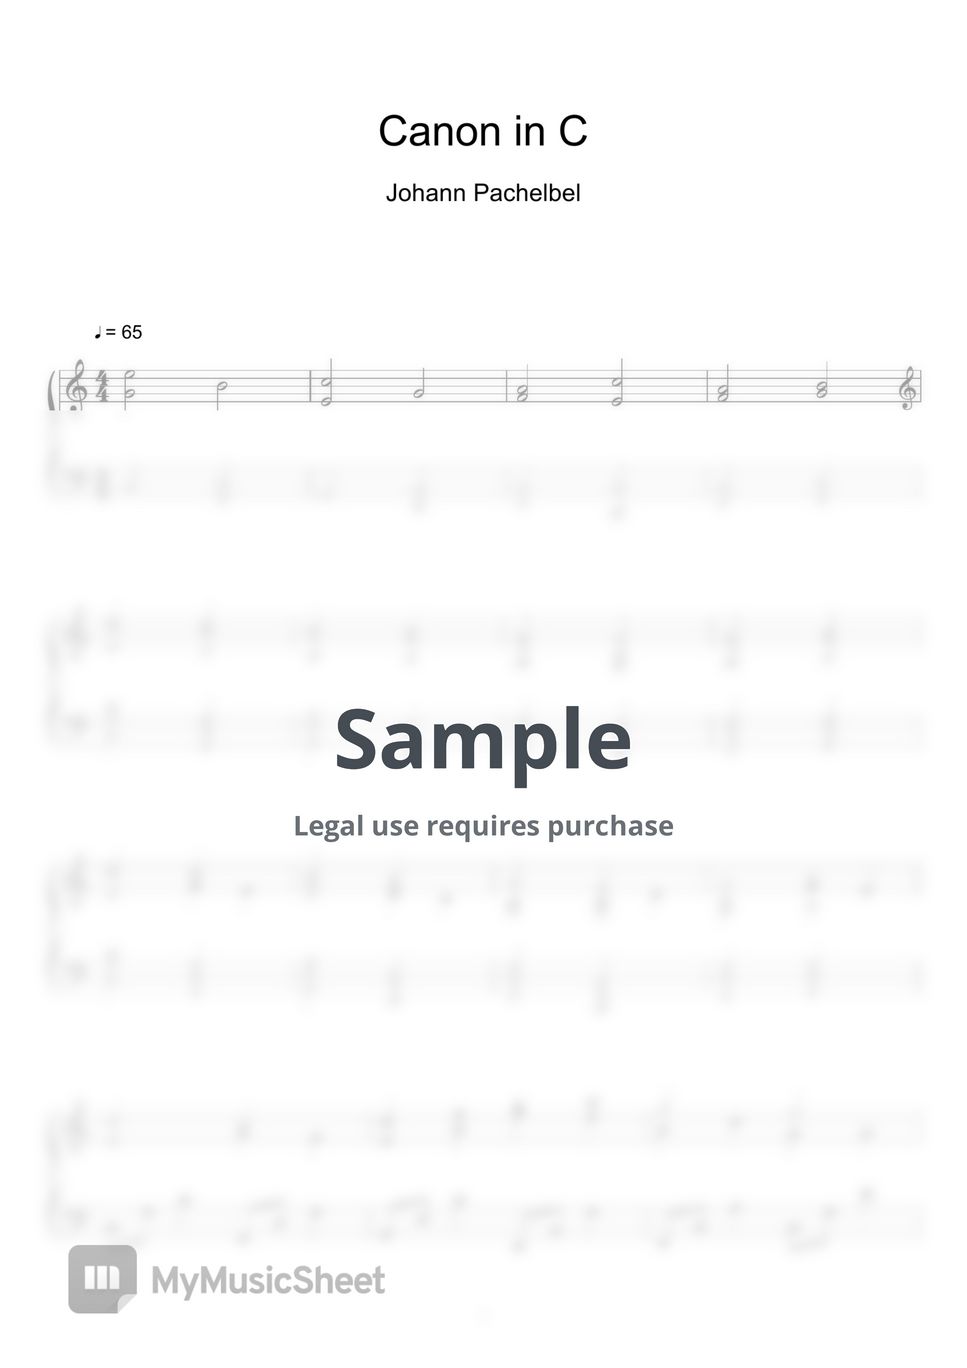 Johann Pachelbel - Canon in C (Sheet Music, MIDI,) by sayu